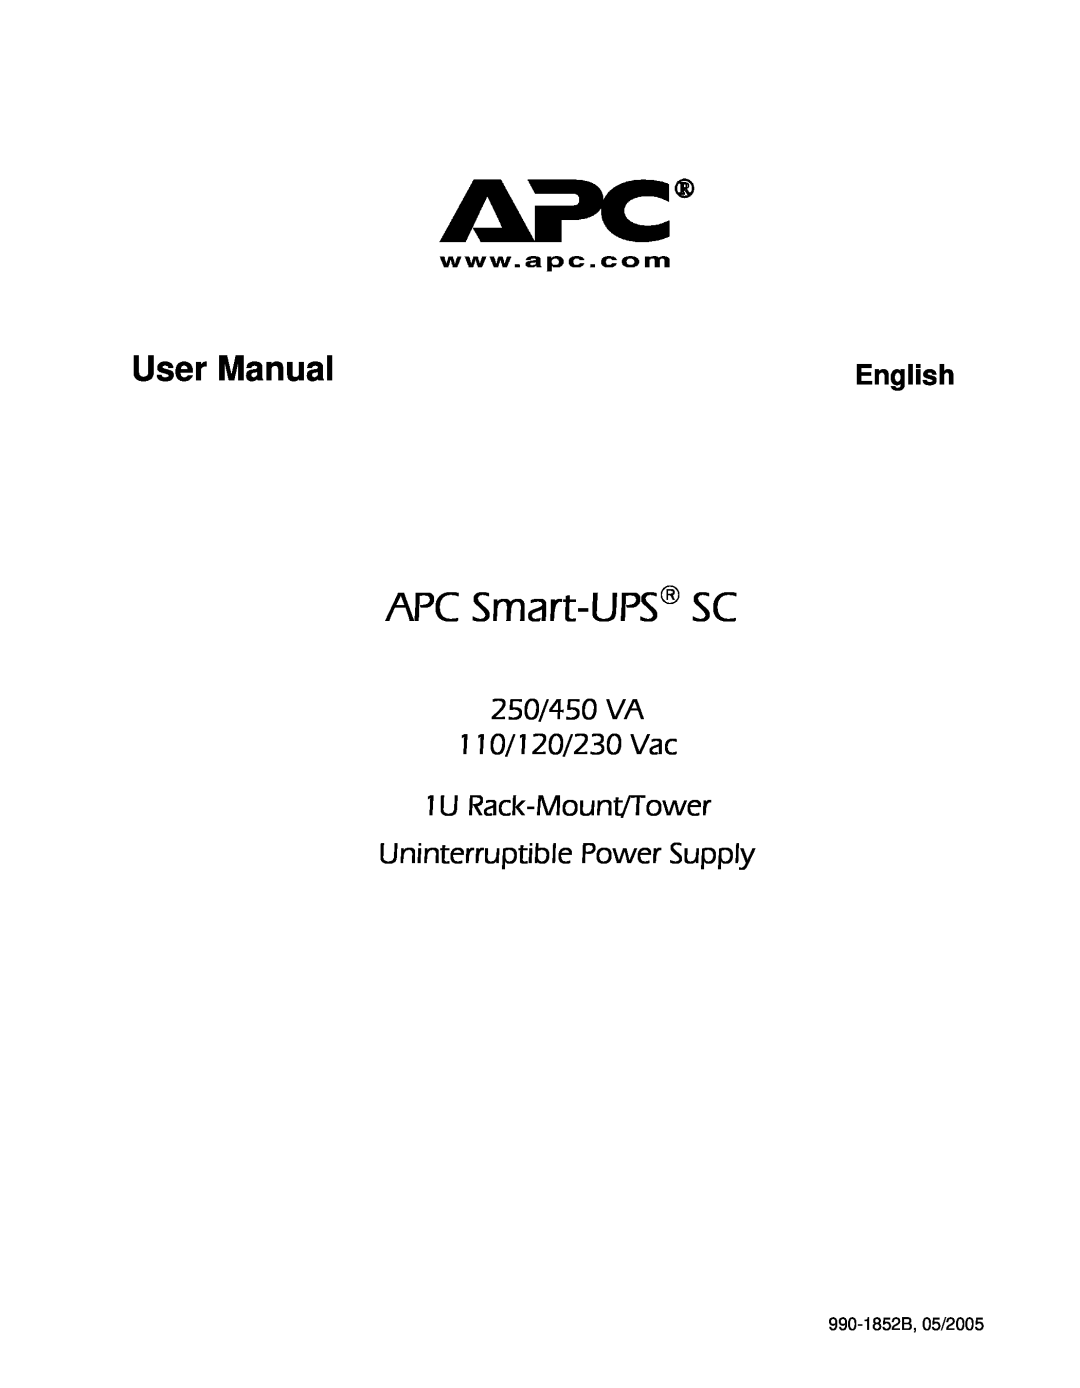 American Power Conversion 110Vac user manual APC Smart-UPS SC, 250/450 VA 110/120/230 Vac 1U Rack-Mount/Tower, English 